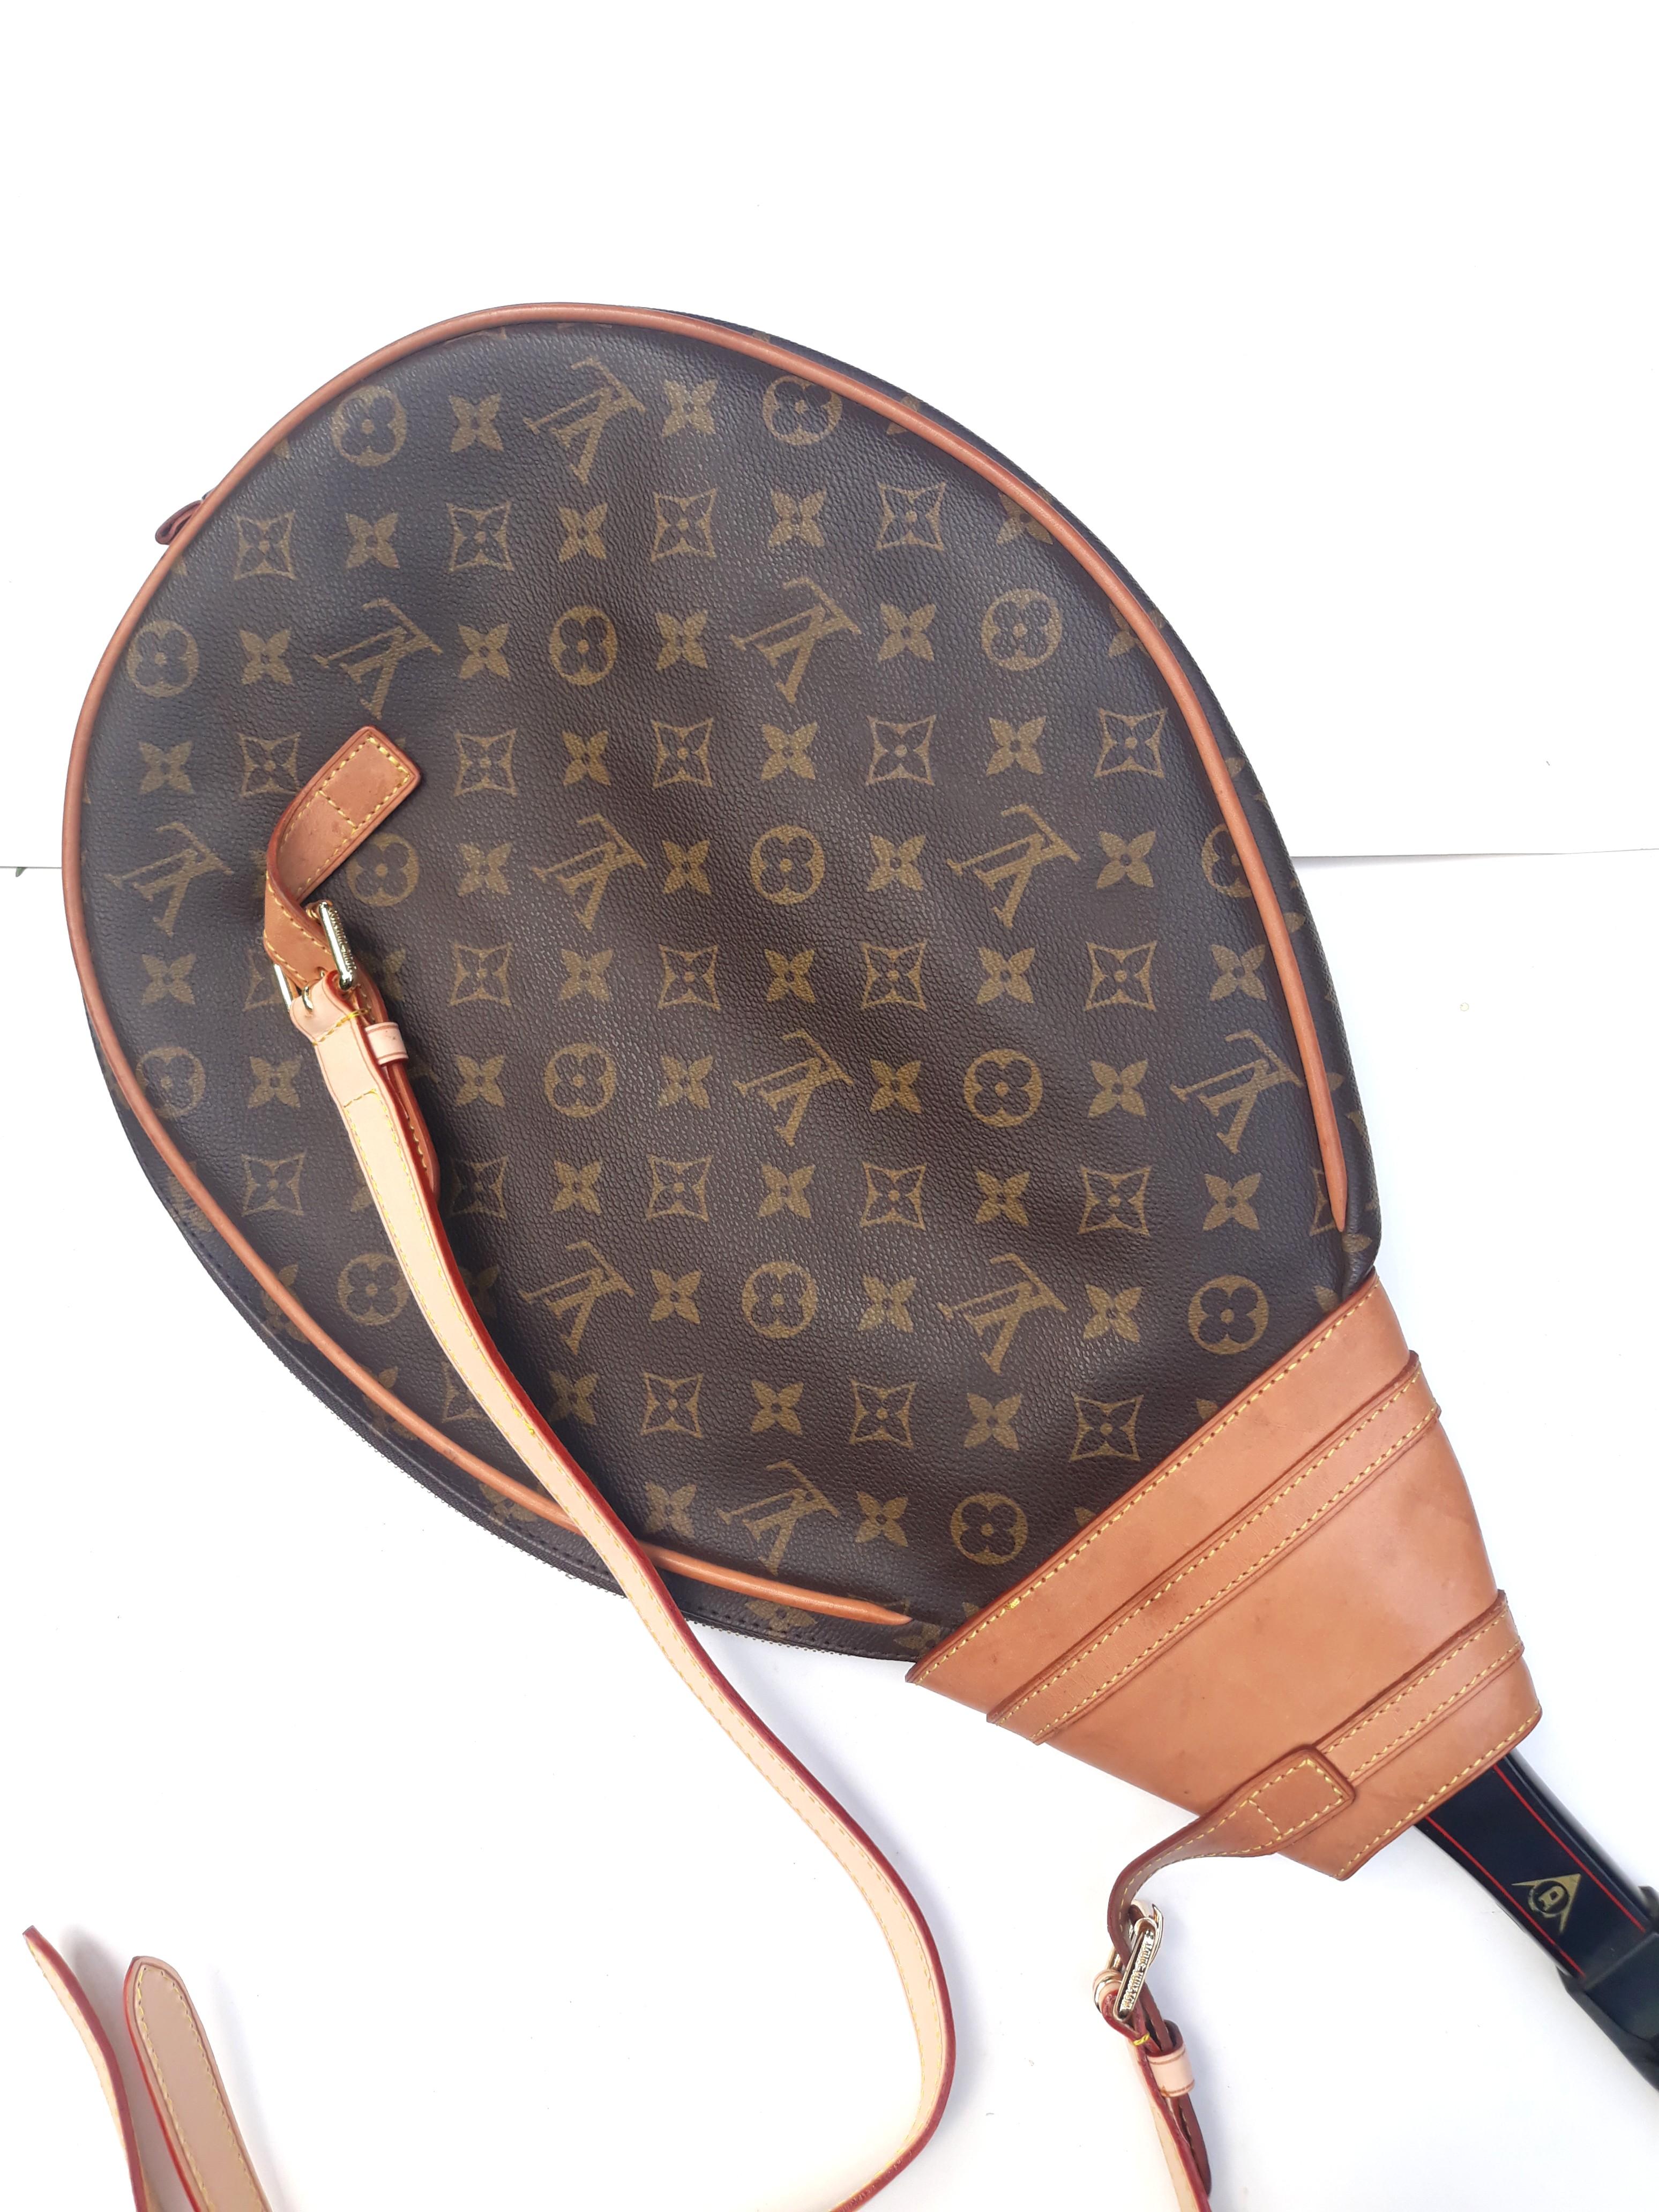 Louis Vuitton, Other, Louisvuittonrare Monogram Tennis Racquet Cover Bag